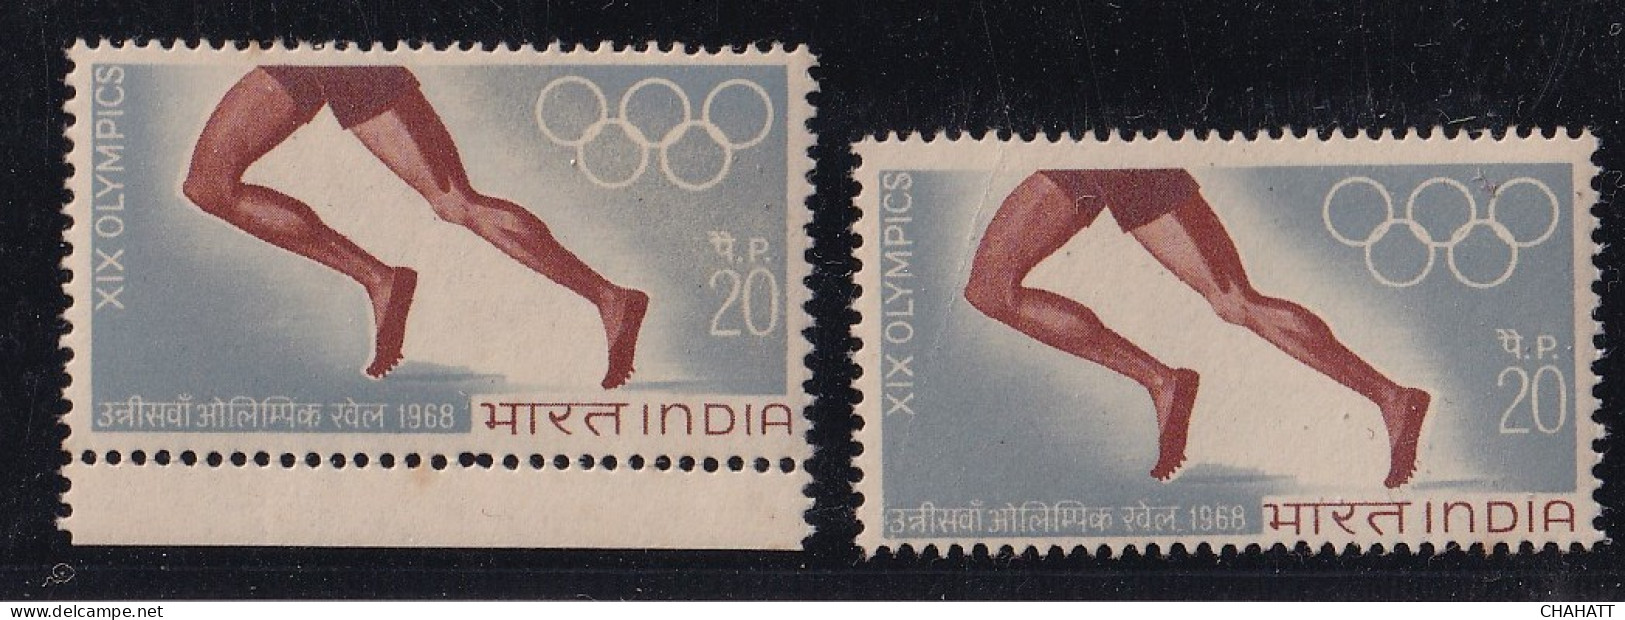 INDIA-19th OLYMPICS- 20p- ERROR-FRAME SHIFTING-MNH-IE-51 - Variedades Y Curiosidades